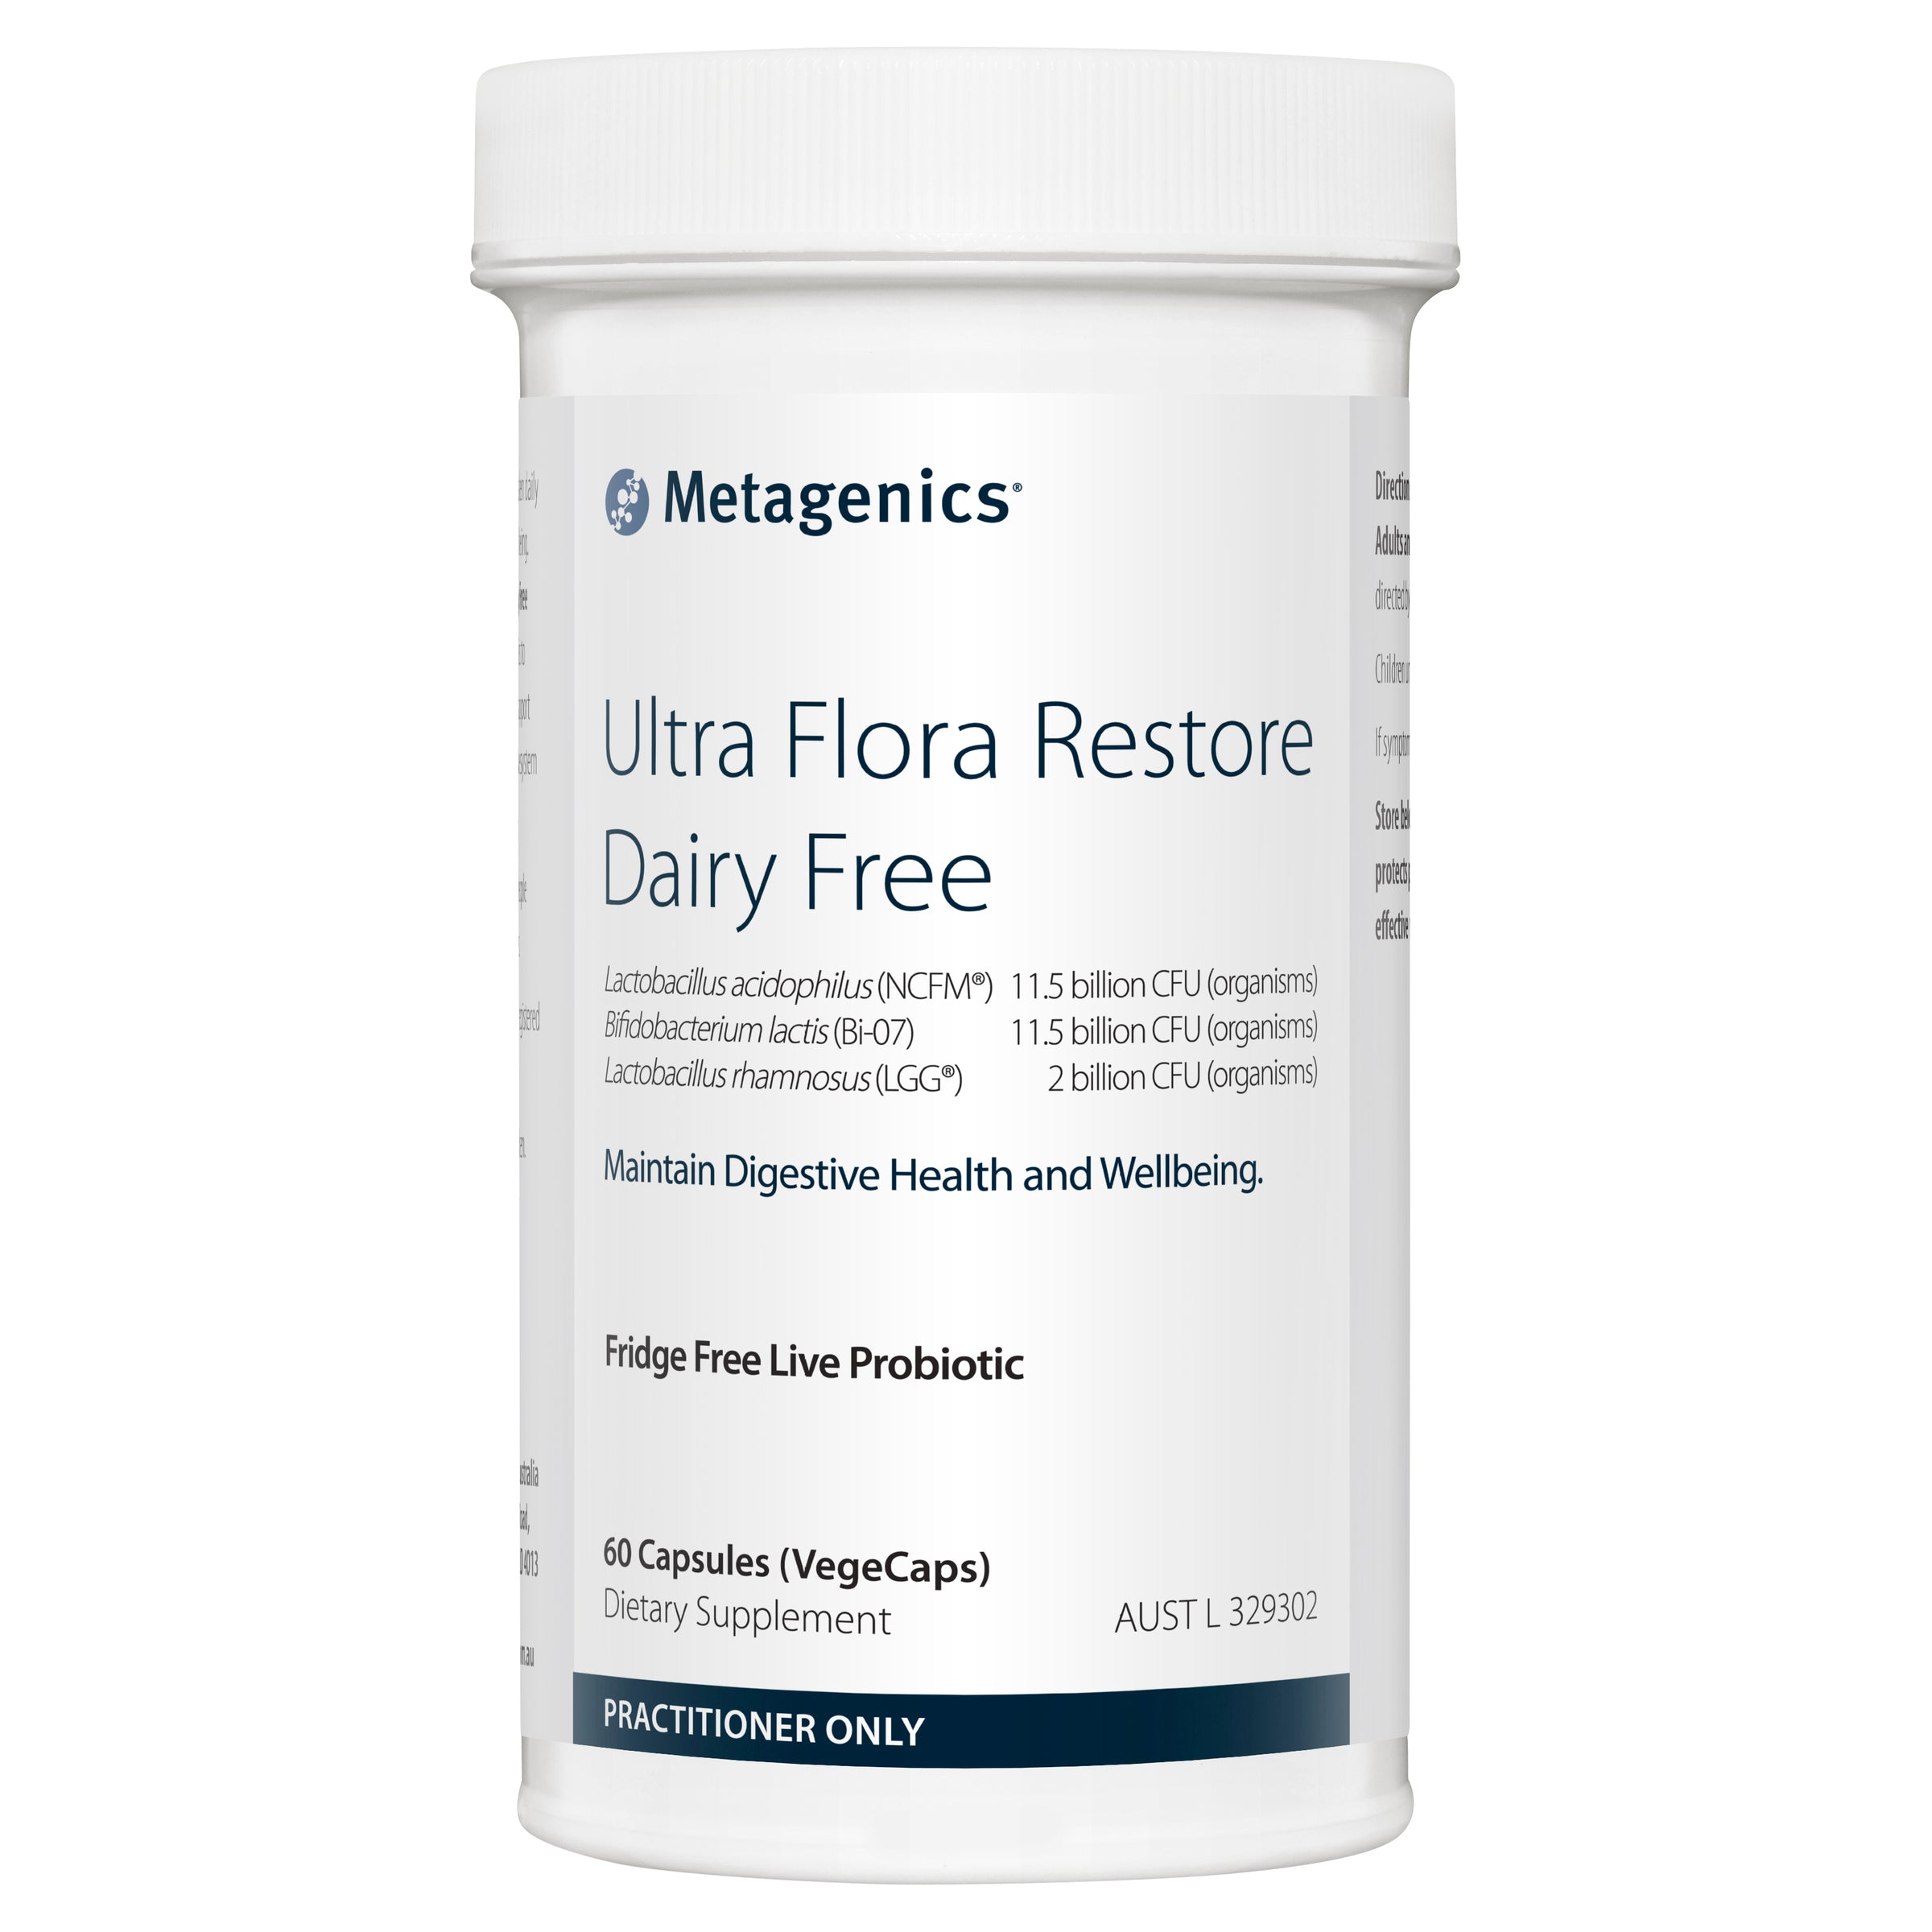 Metagenics Ultra Flora Restore Dairy Free 60 Capsules (VegeCaps)